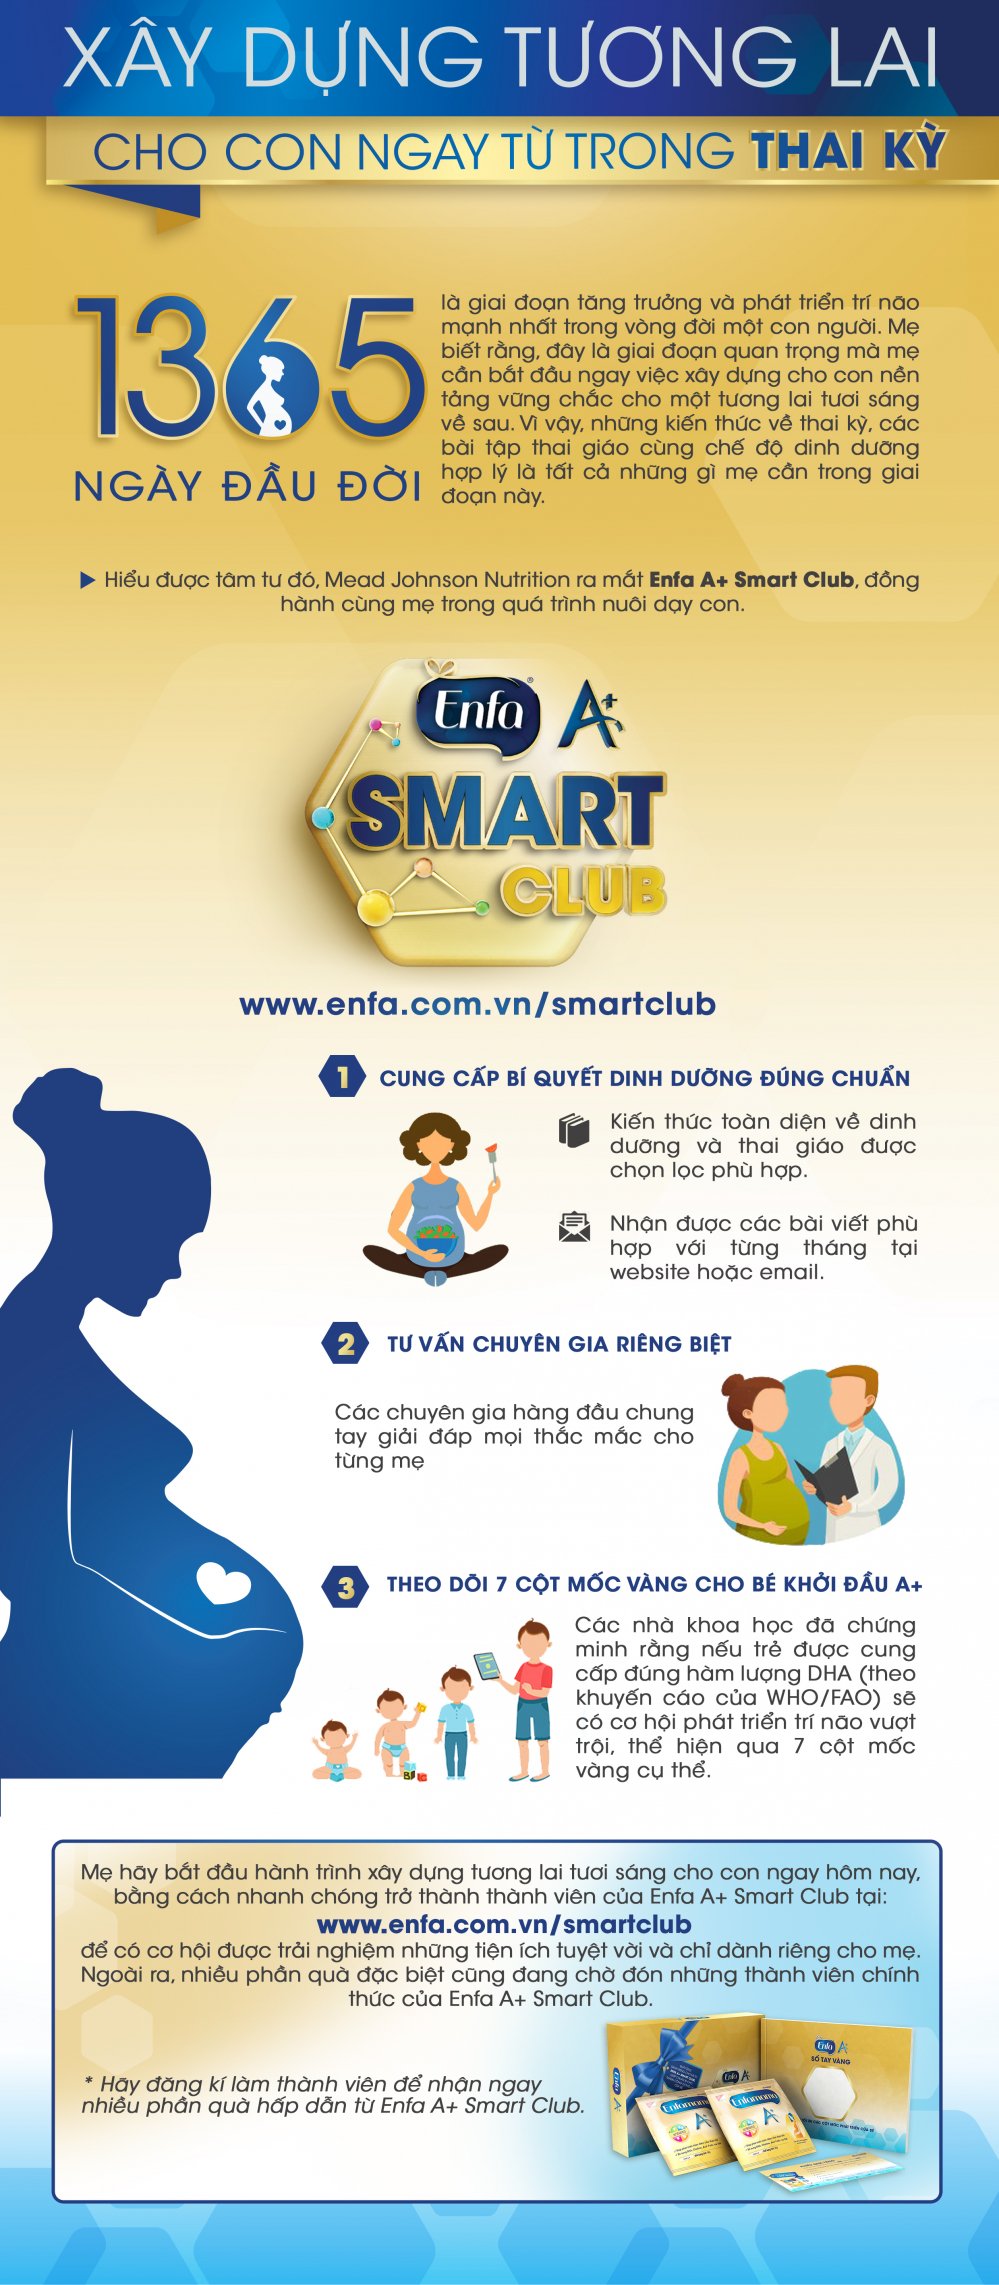 MJN-Enfa Smart Club-Infographic 3 - FINAL